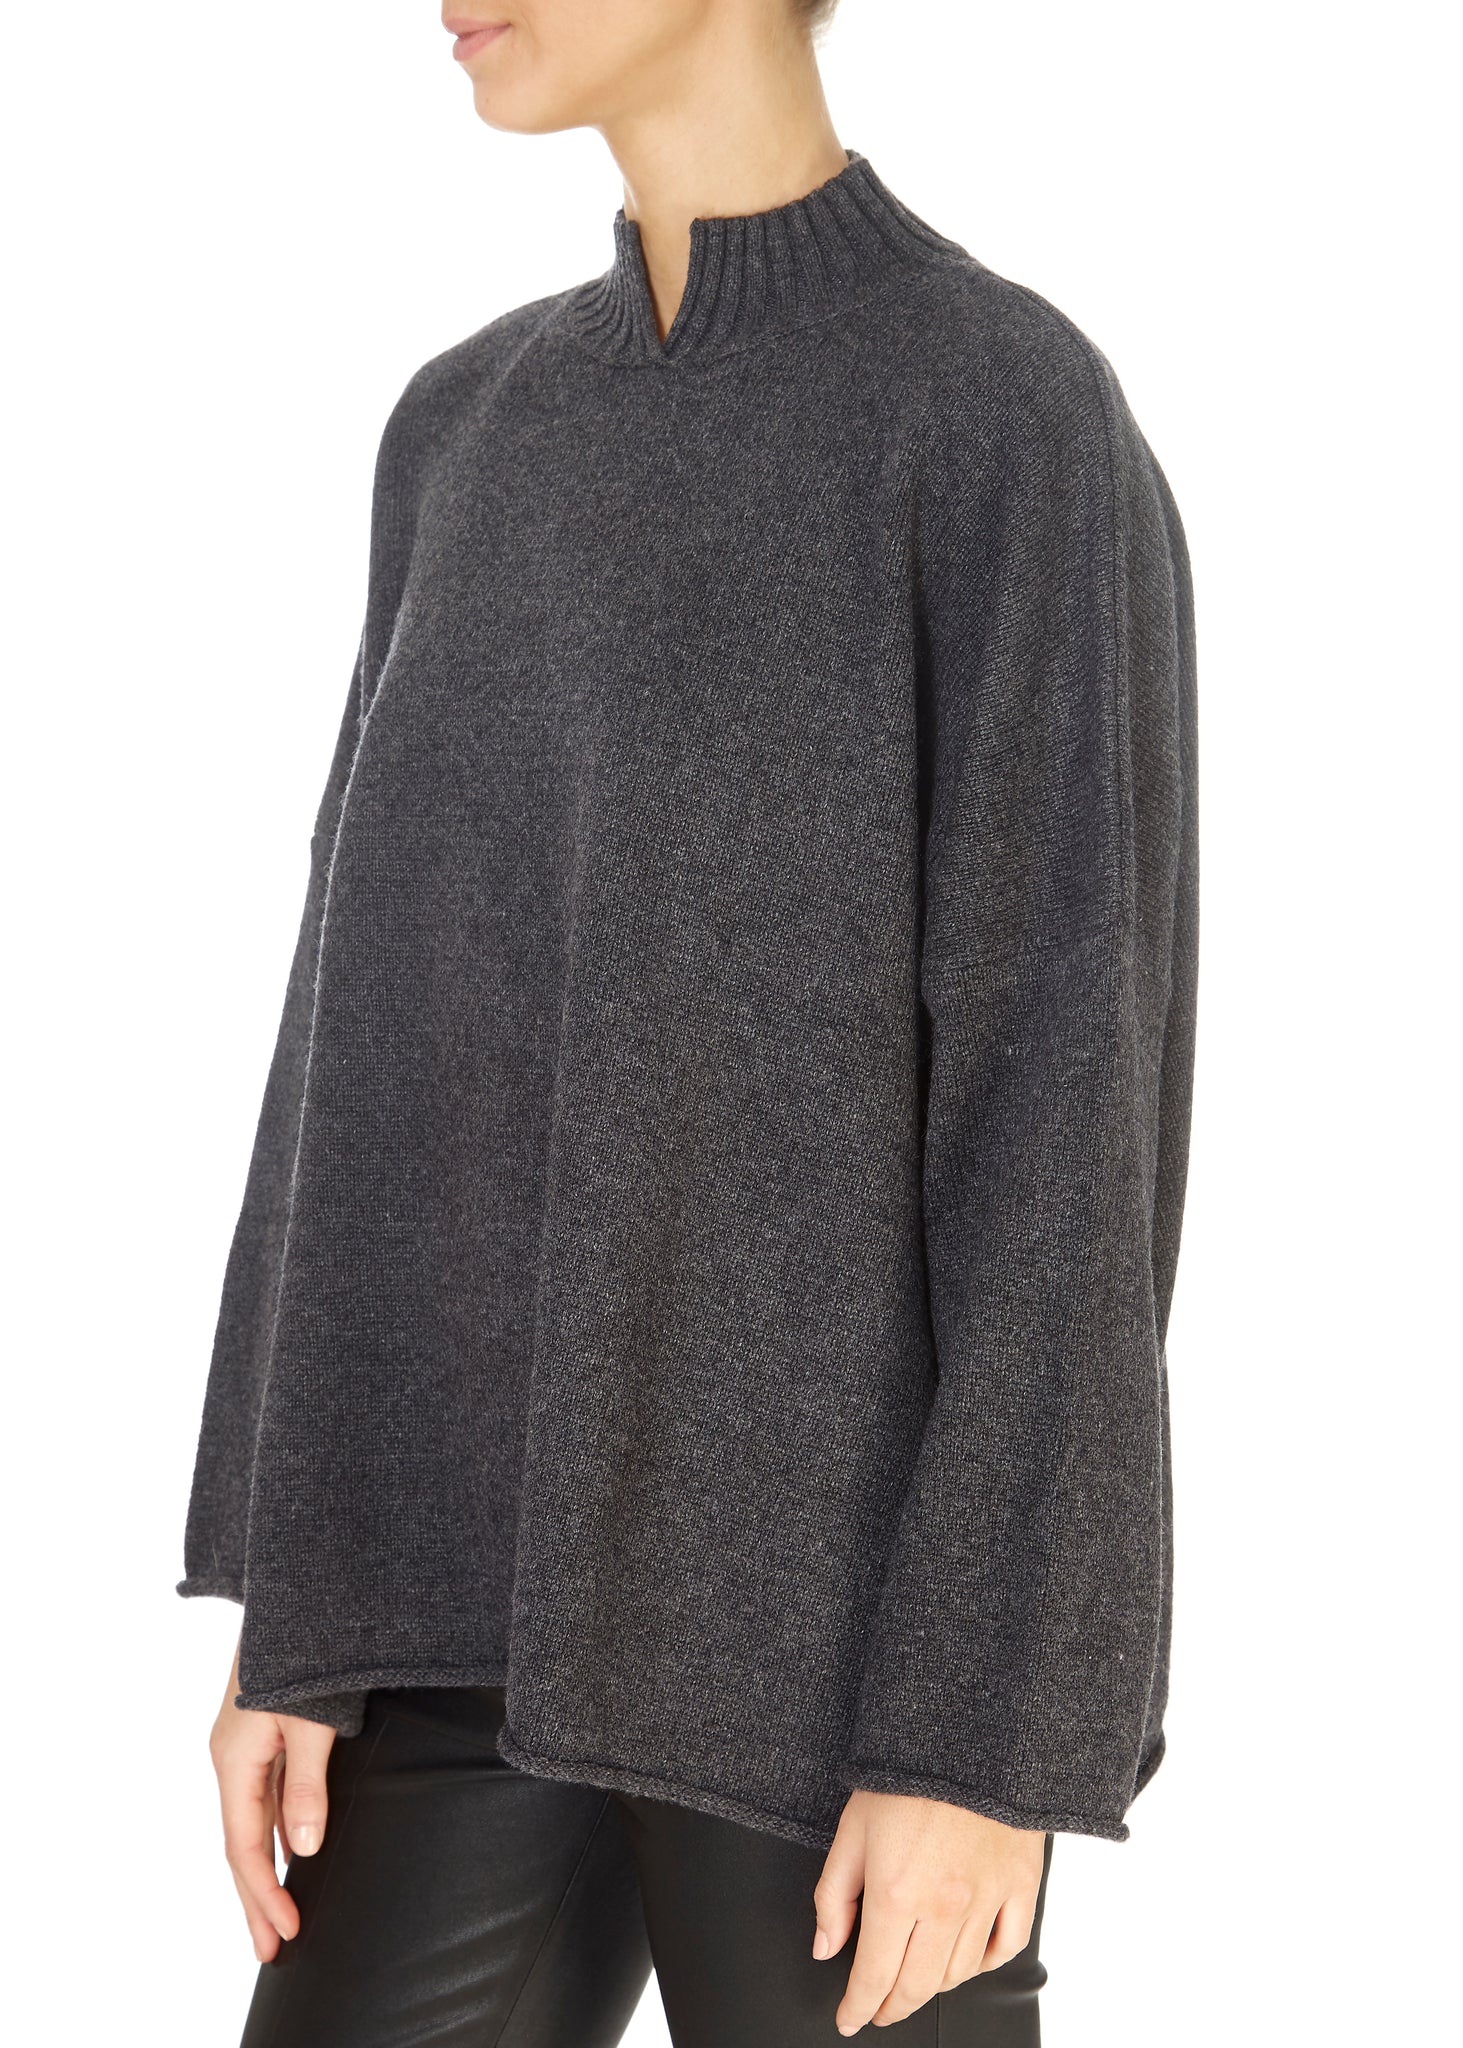 'Stella' Graphite Grey Cashmere Sweater - Jessimara